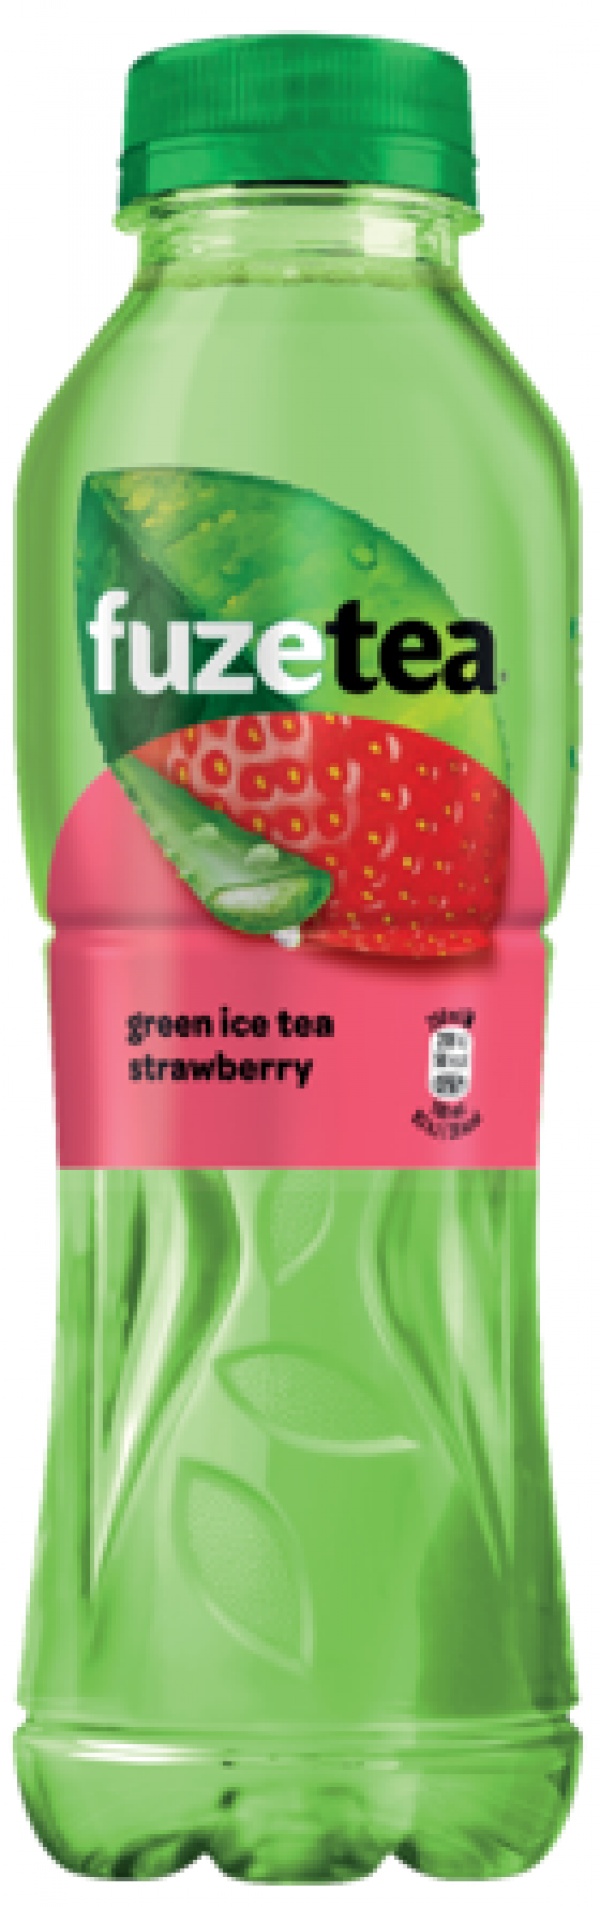 Fuze green ice tea jahoda, 500ml 